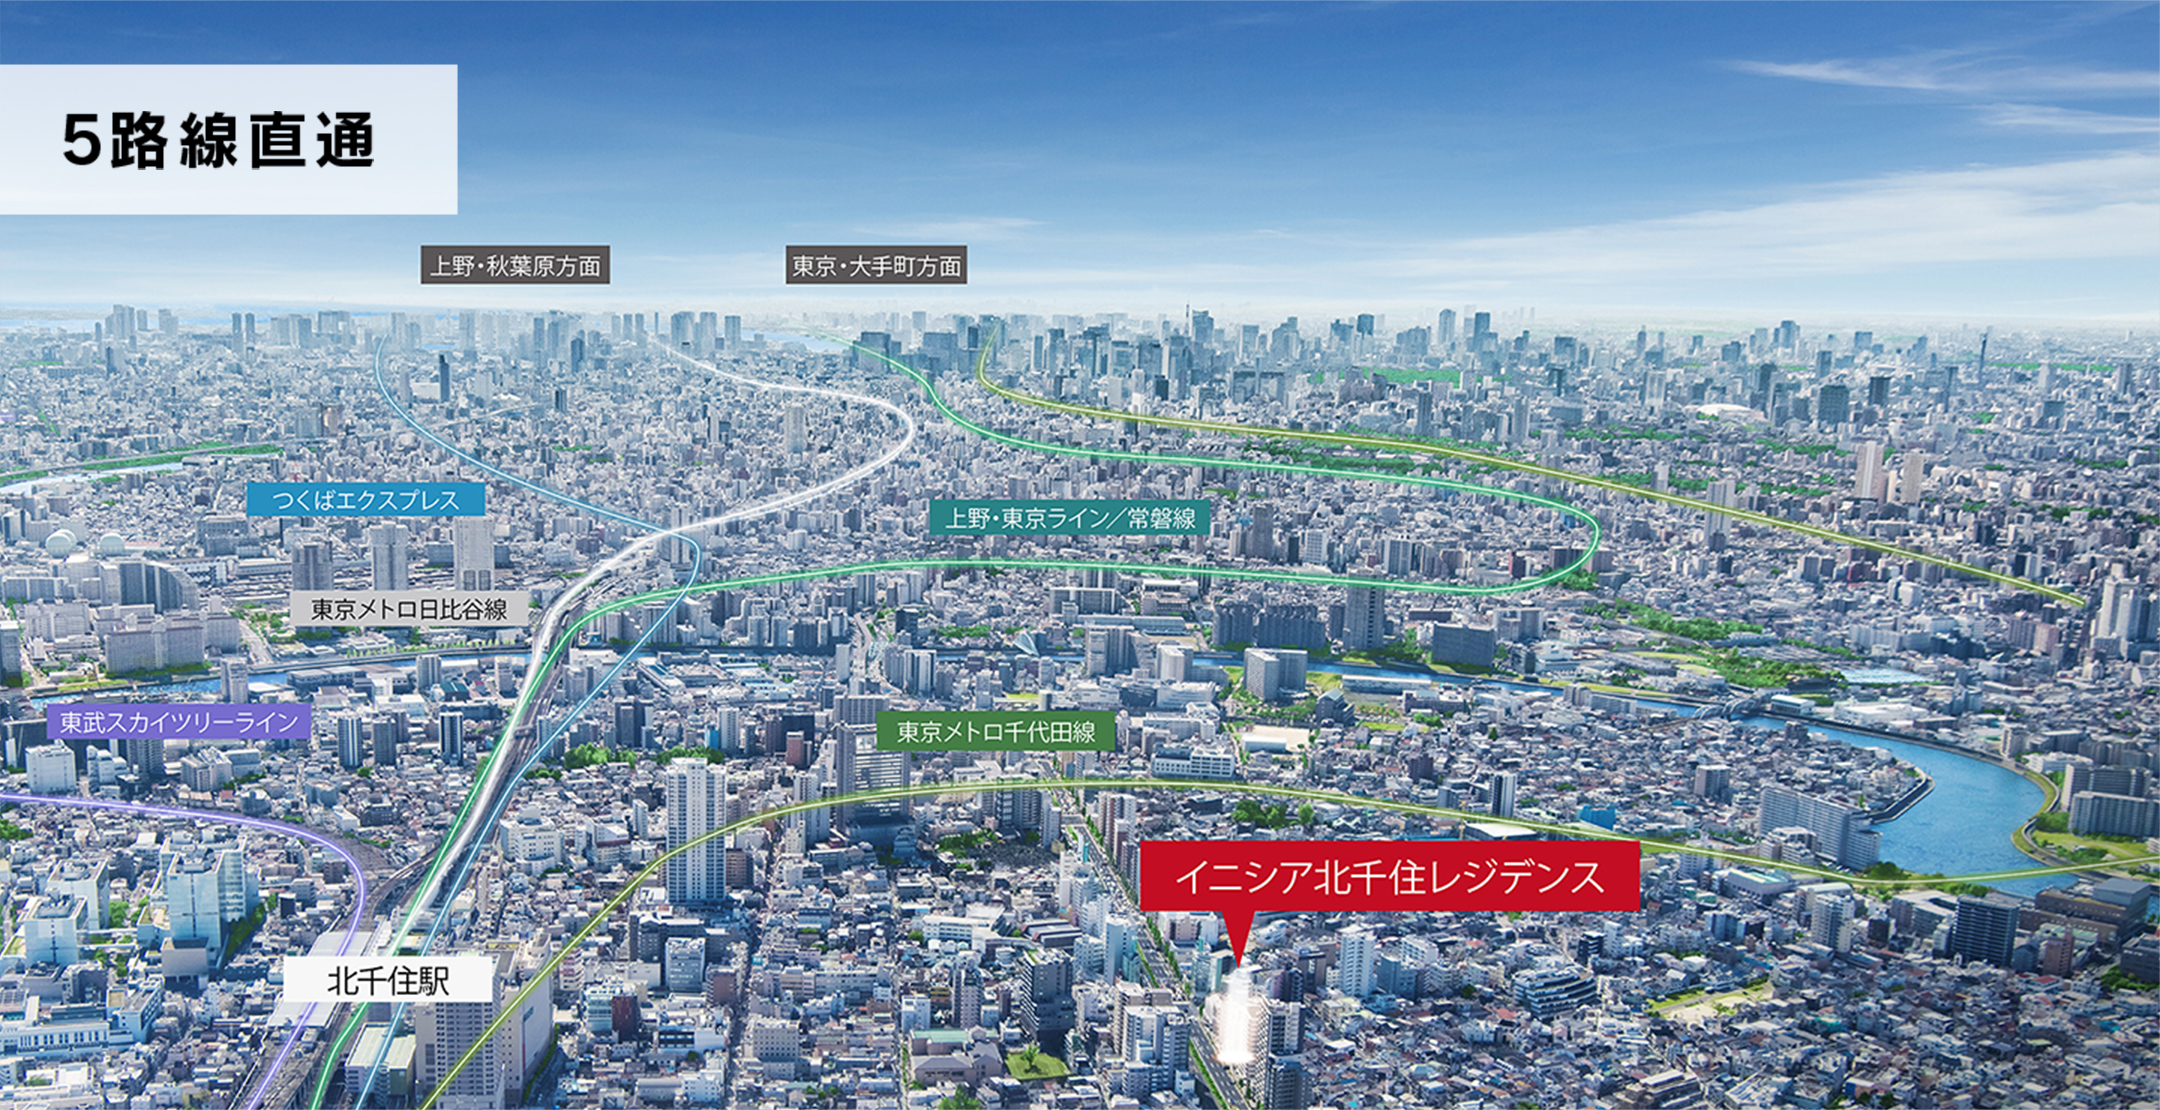 KITASENJU 北千住の先駆。そこには、知るほどに暮らしやすい東京がある